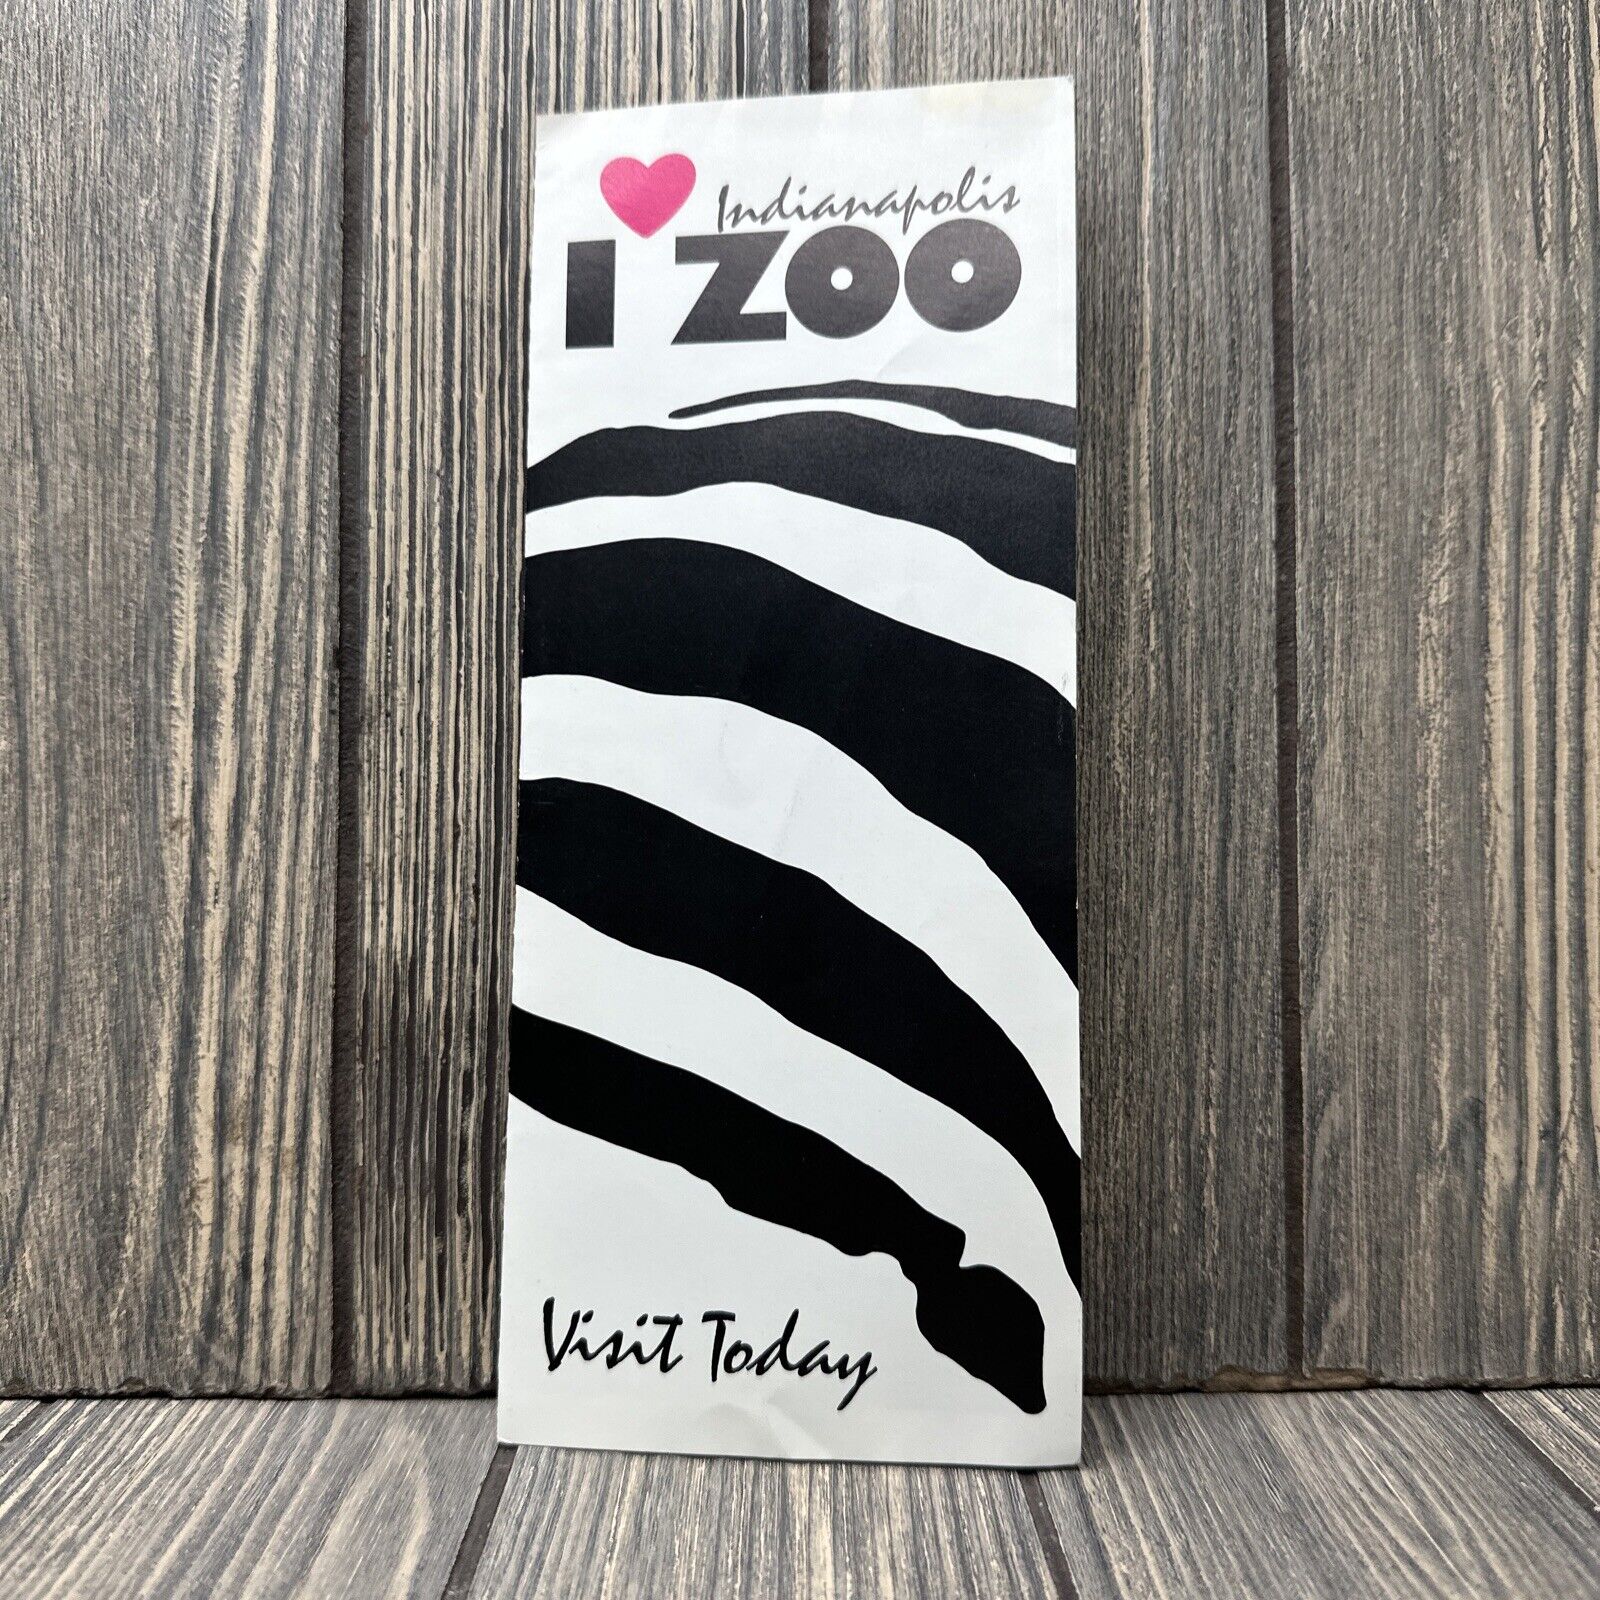 Vintage Indianapolis Zoo Visit Today Brochure